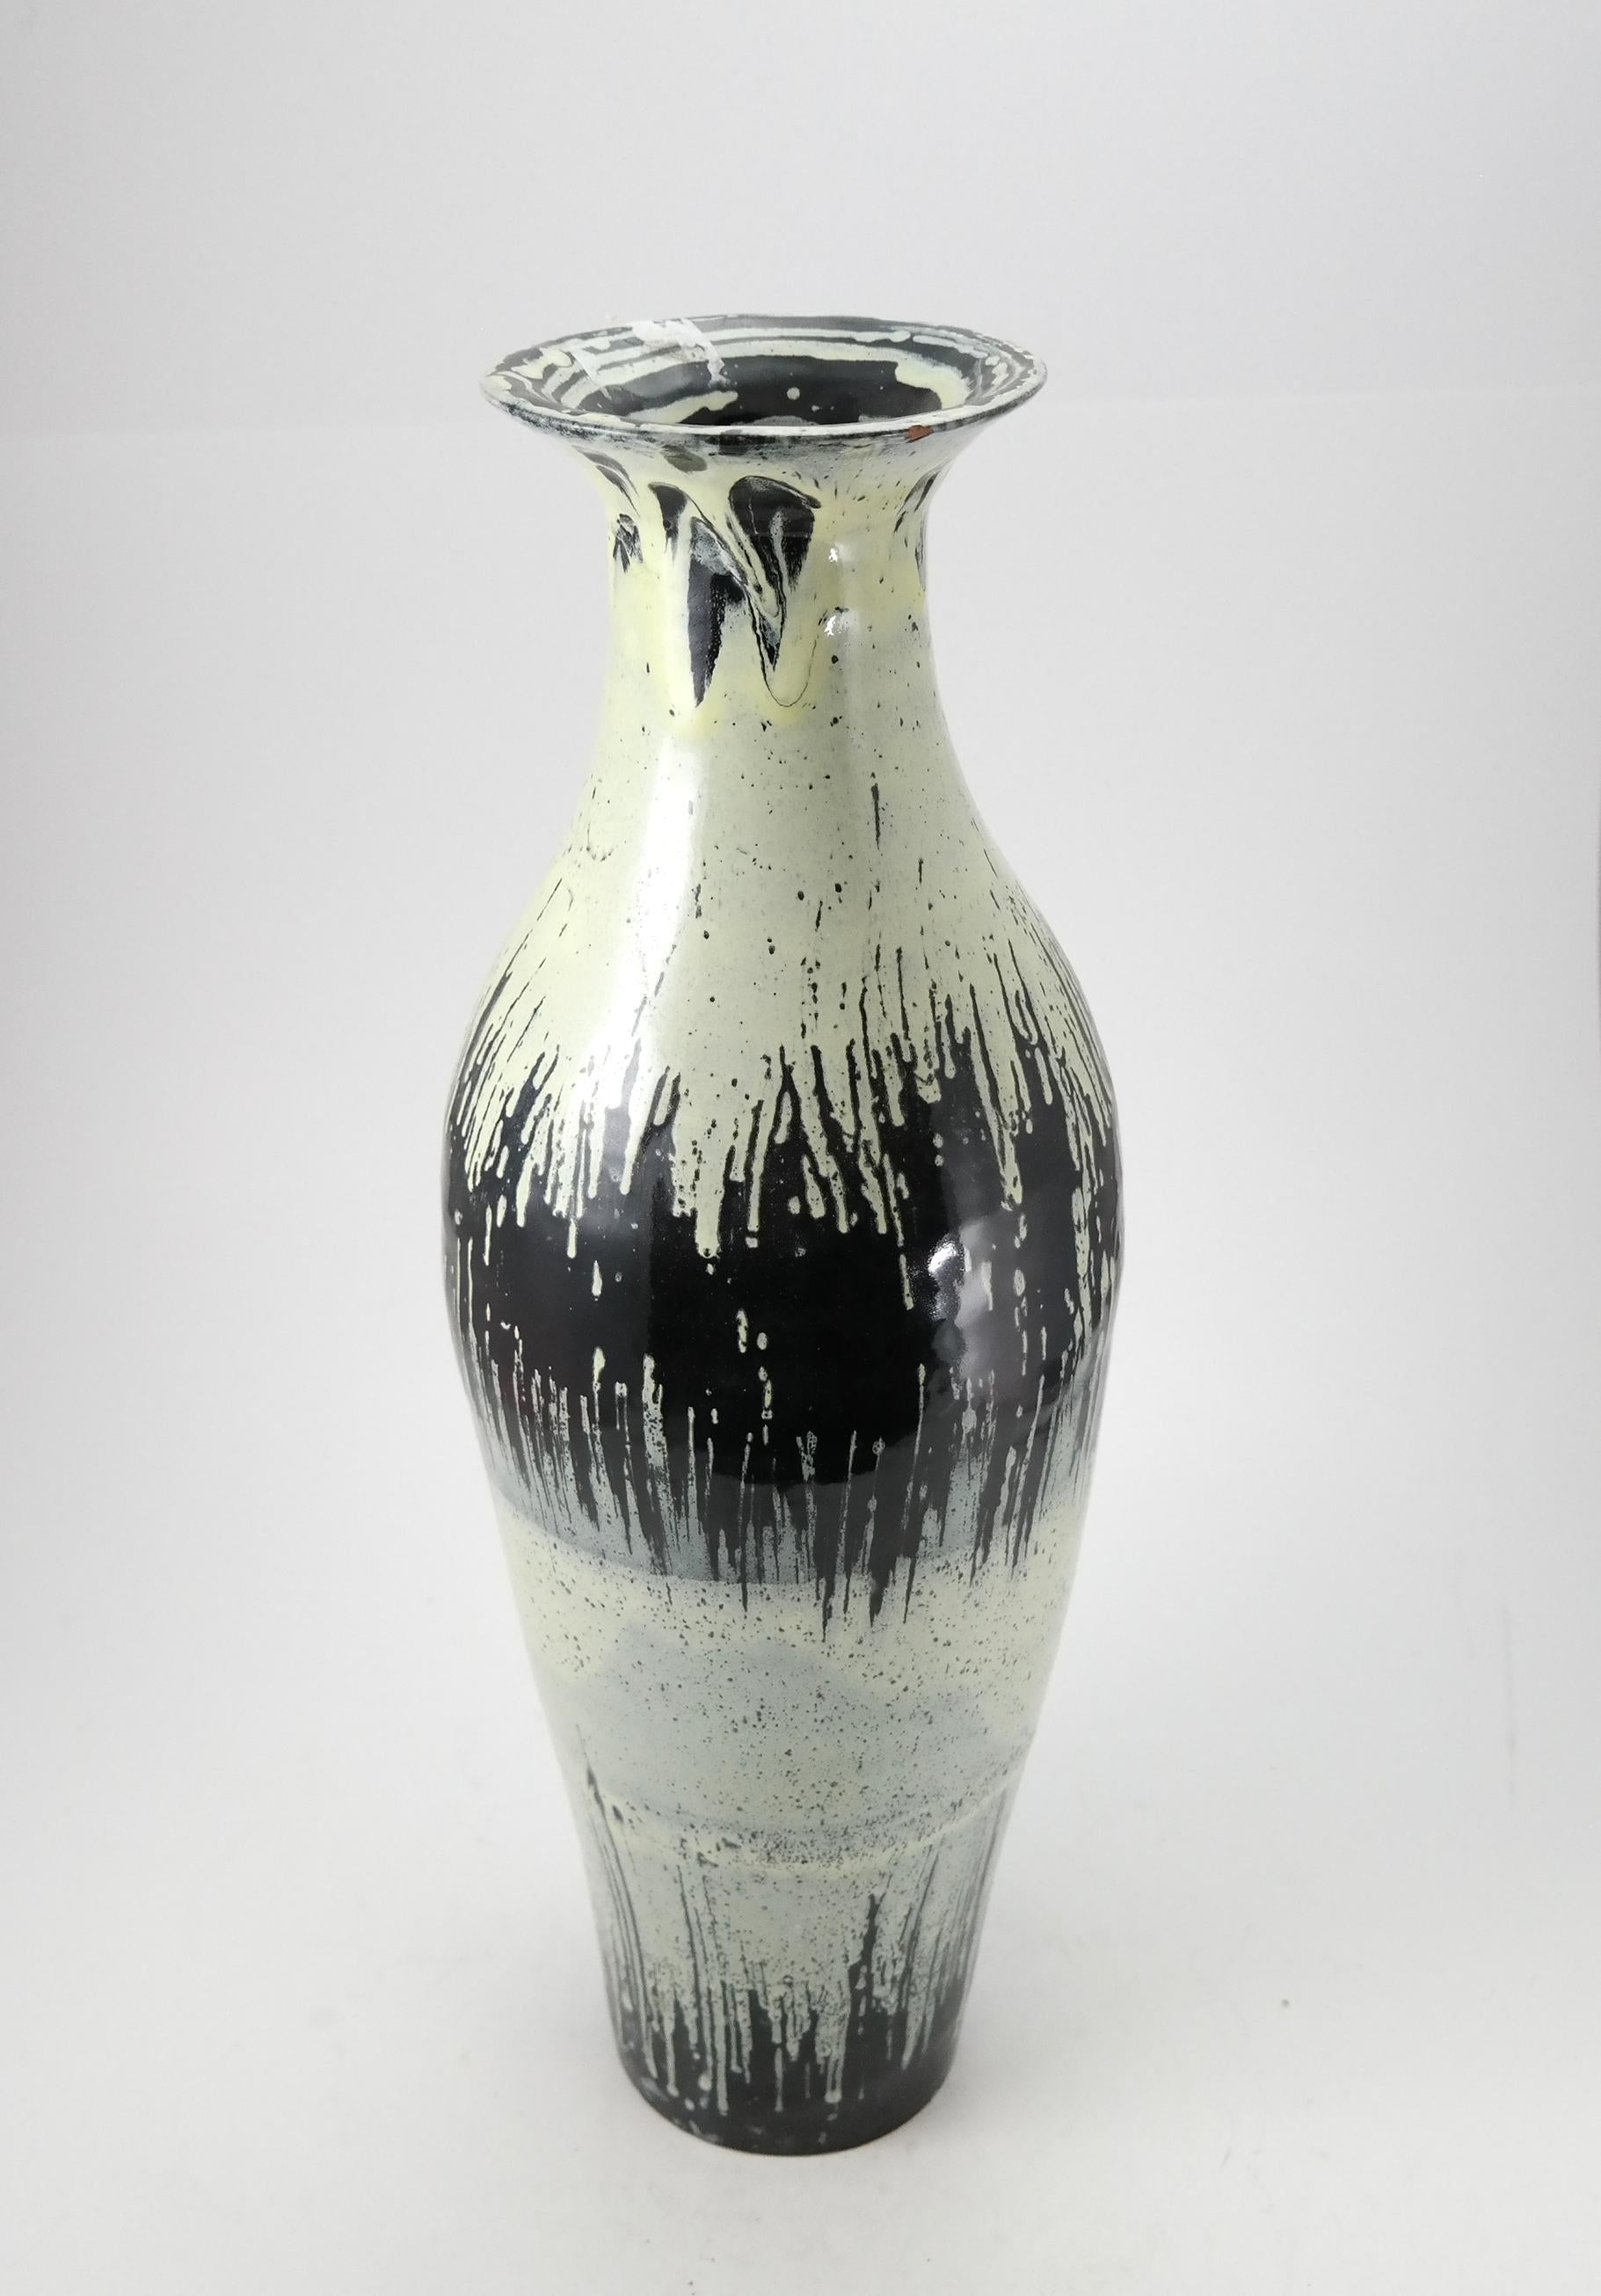 Midcentury ceramic floor vase with high gloss glase, 1970s.